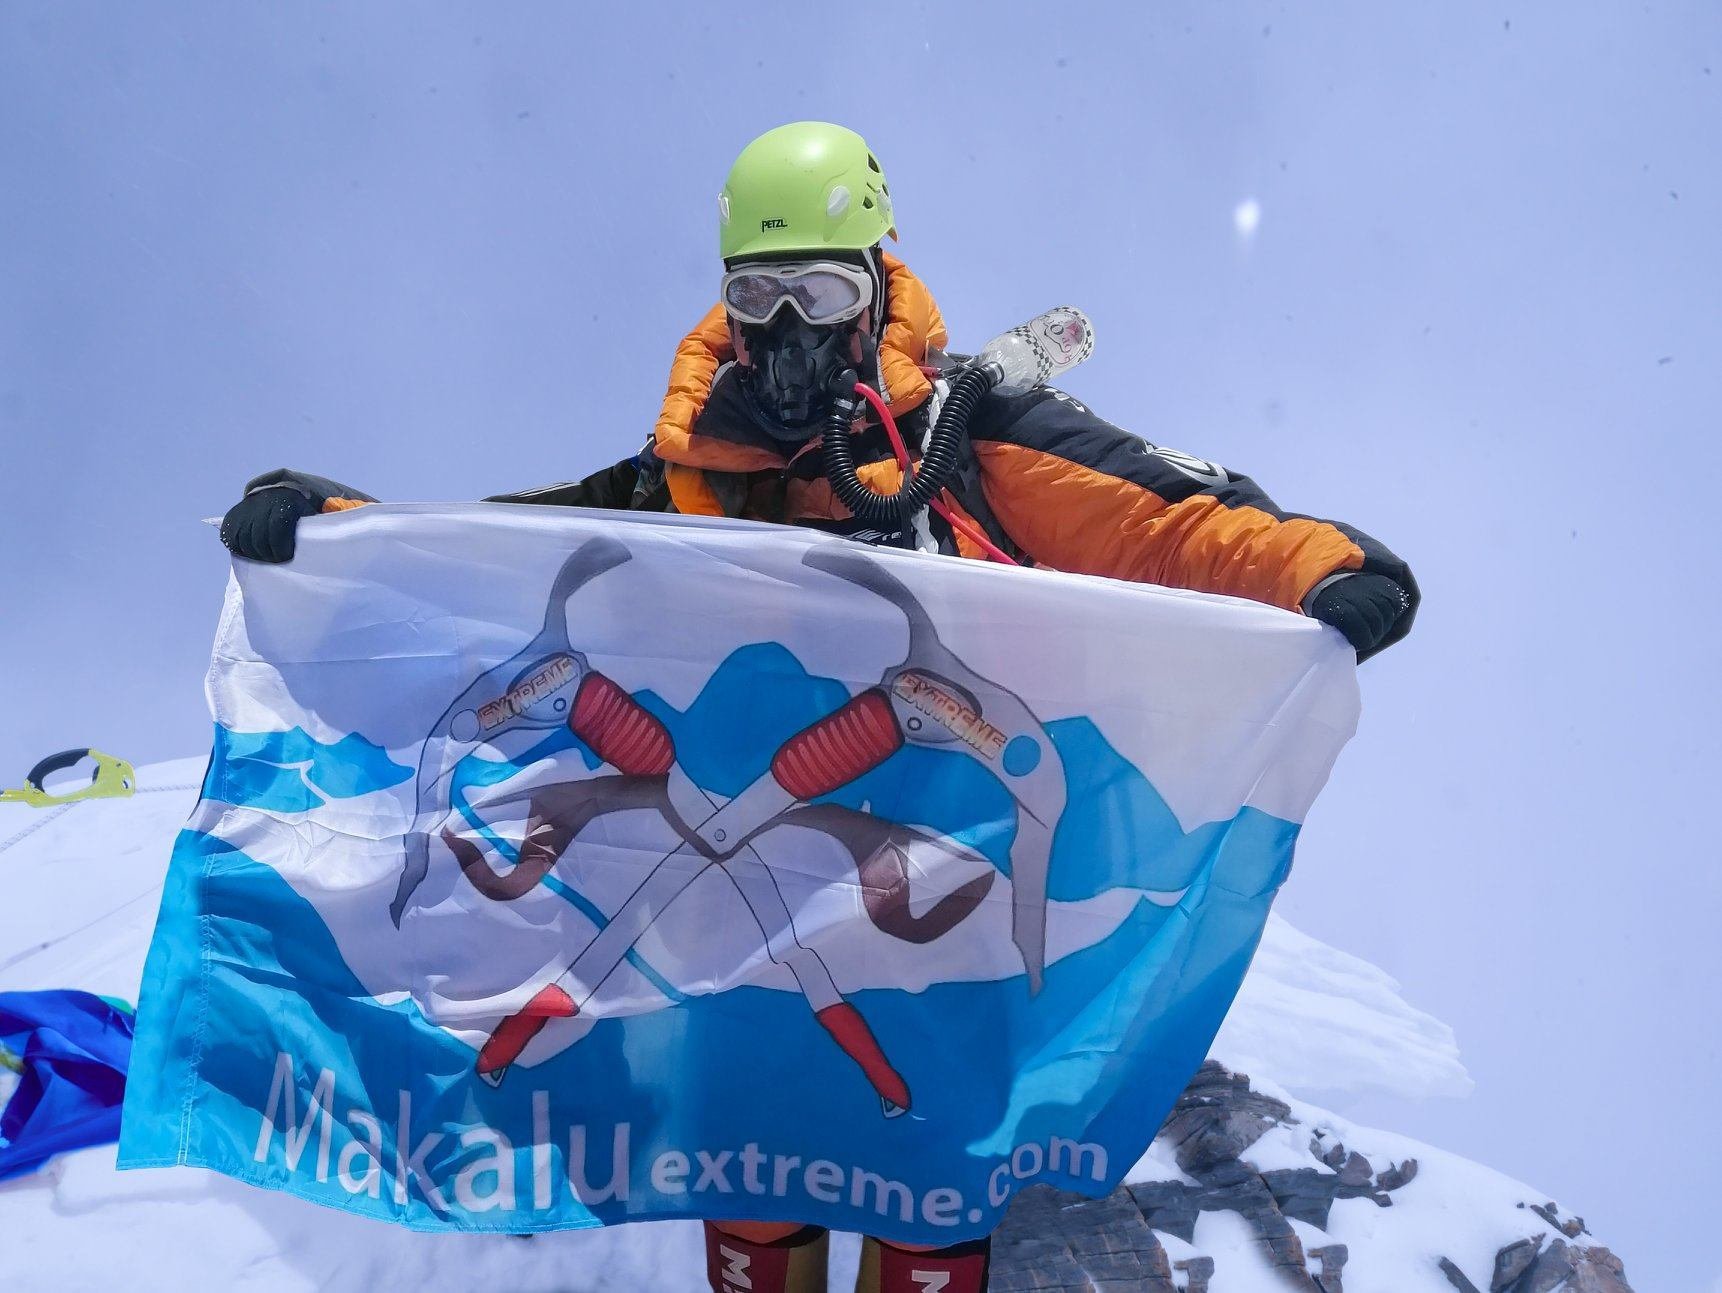 Lhotse 8516 climbing expedition - 2019